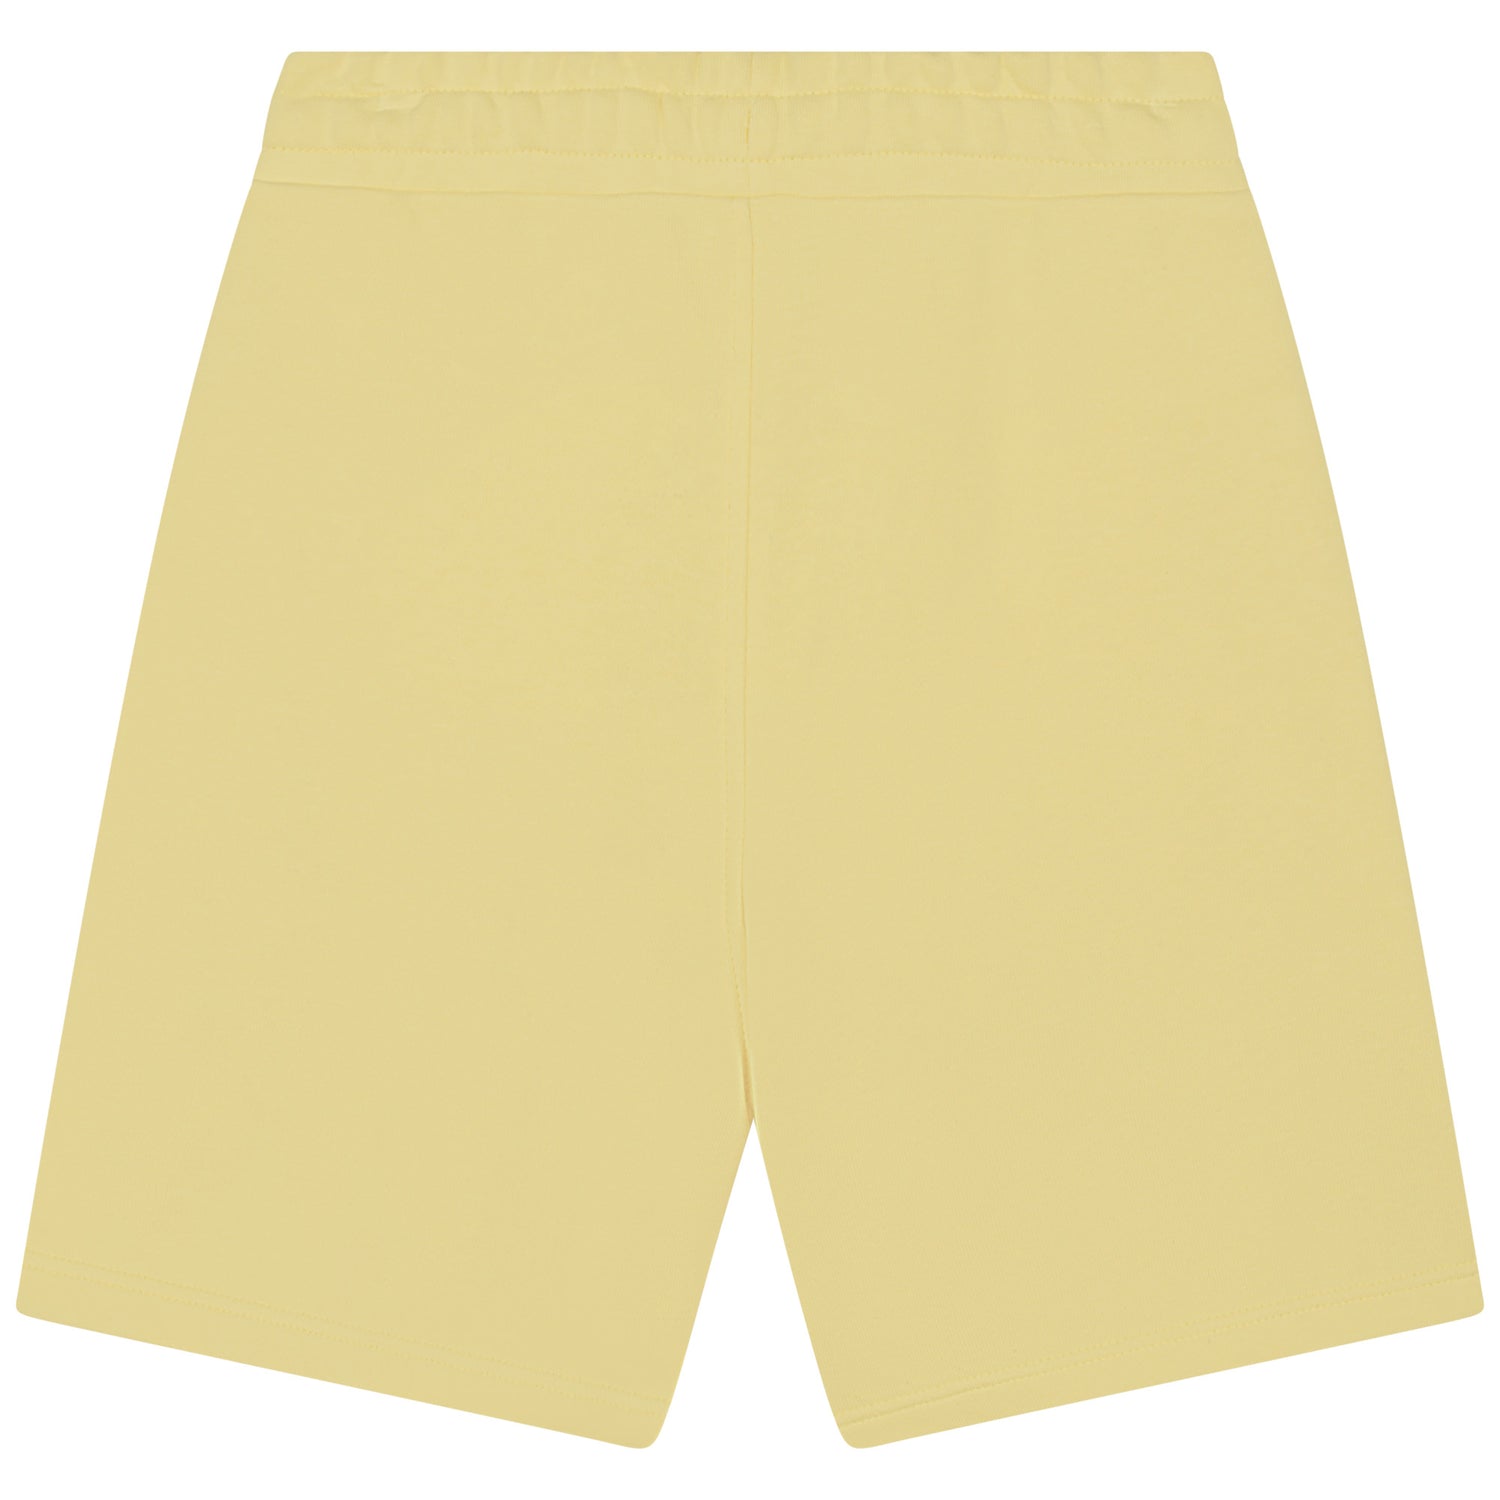 Hugo Boss Bermuda Shorts Style: J24816